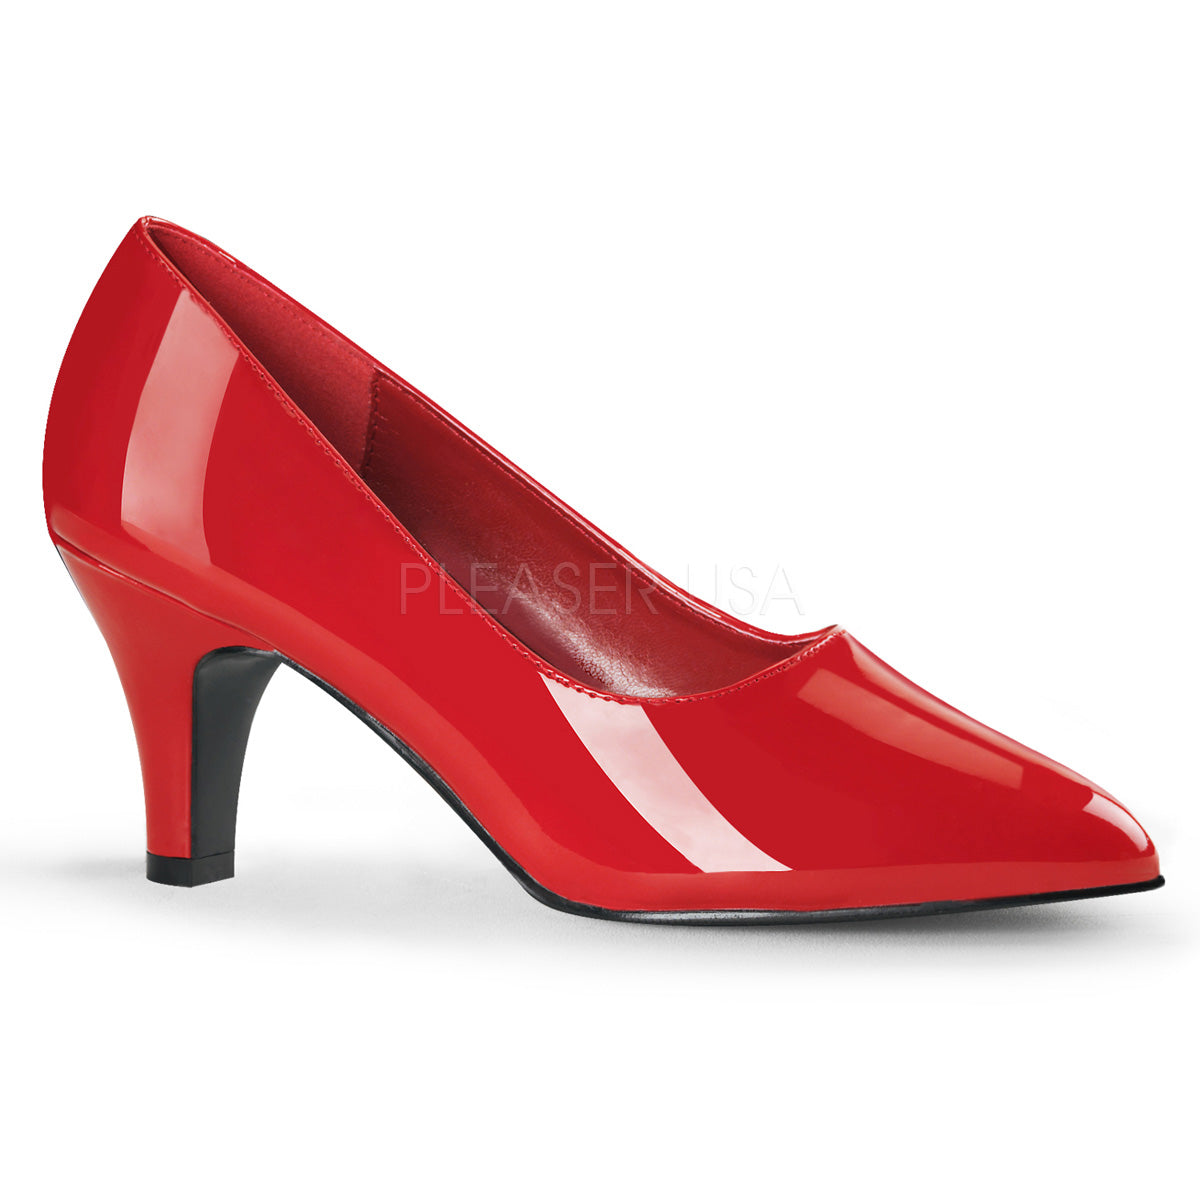 Vivienne Westwood Silver Court Shoe Heel - Rellik